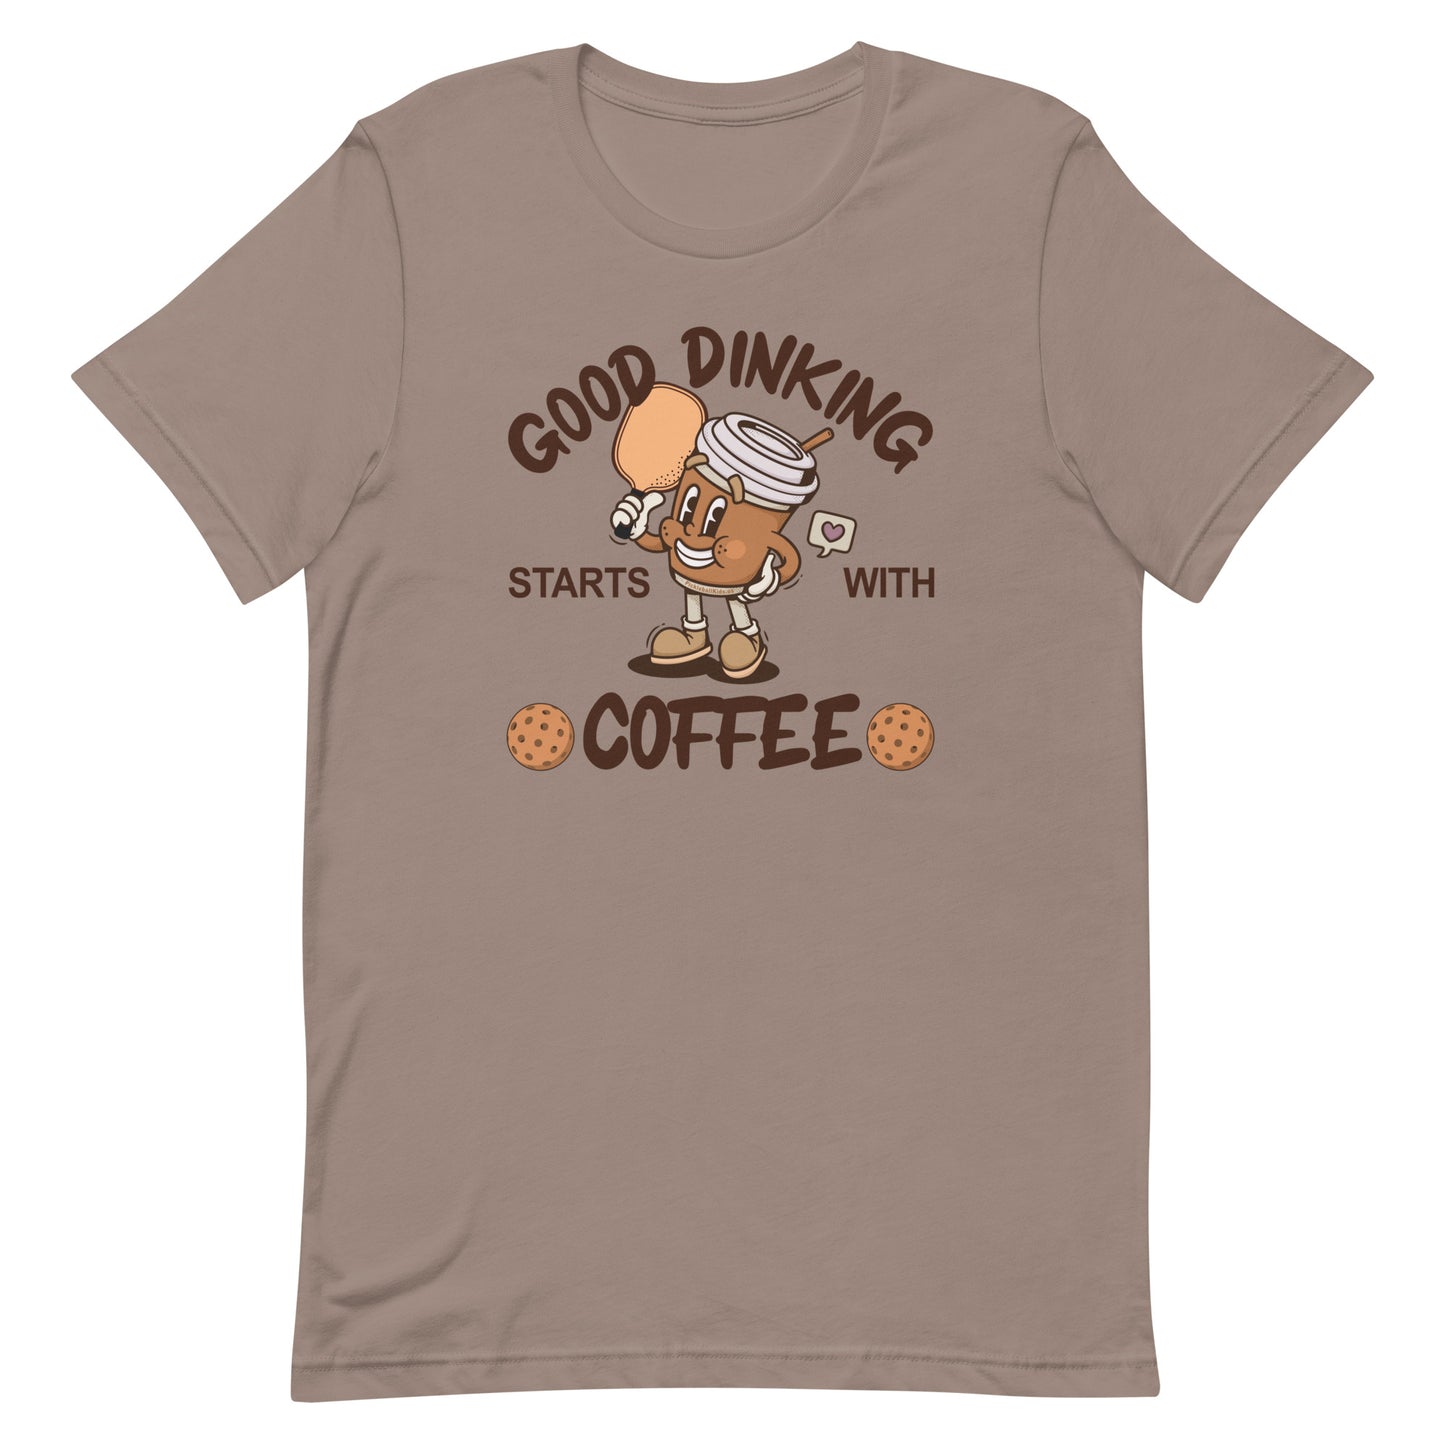 Retro - Vintage Fun Pickleball "Good Dinking Starts With Coffee" Unisex T-Shirt